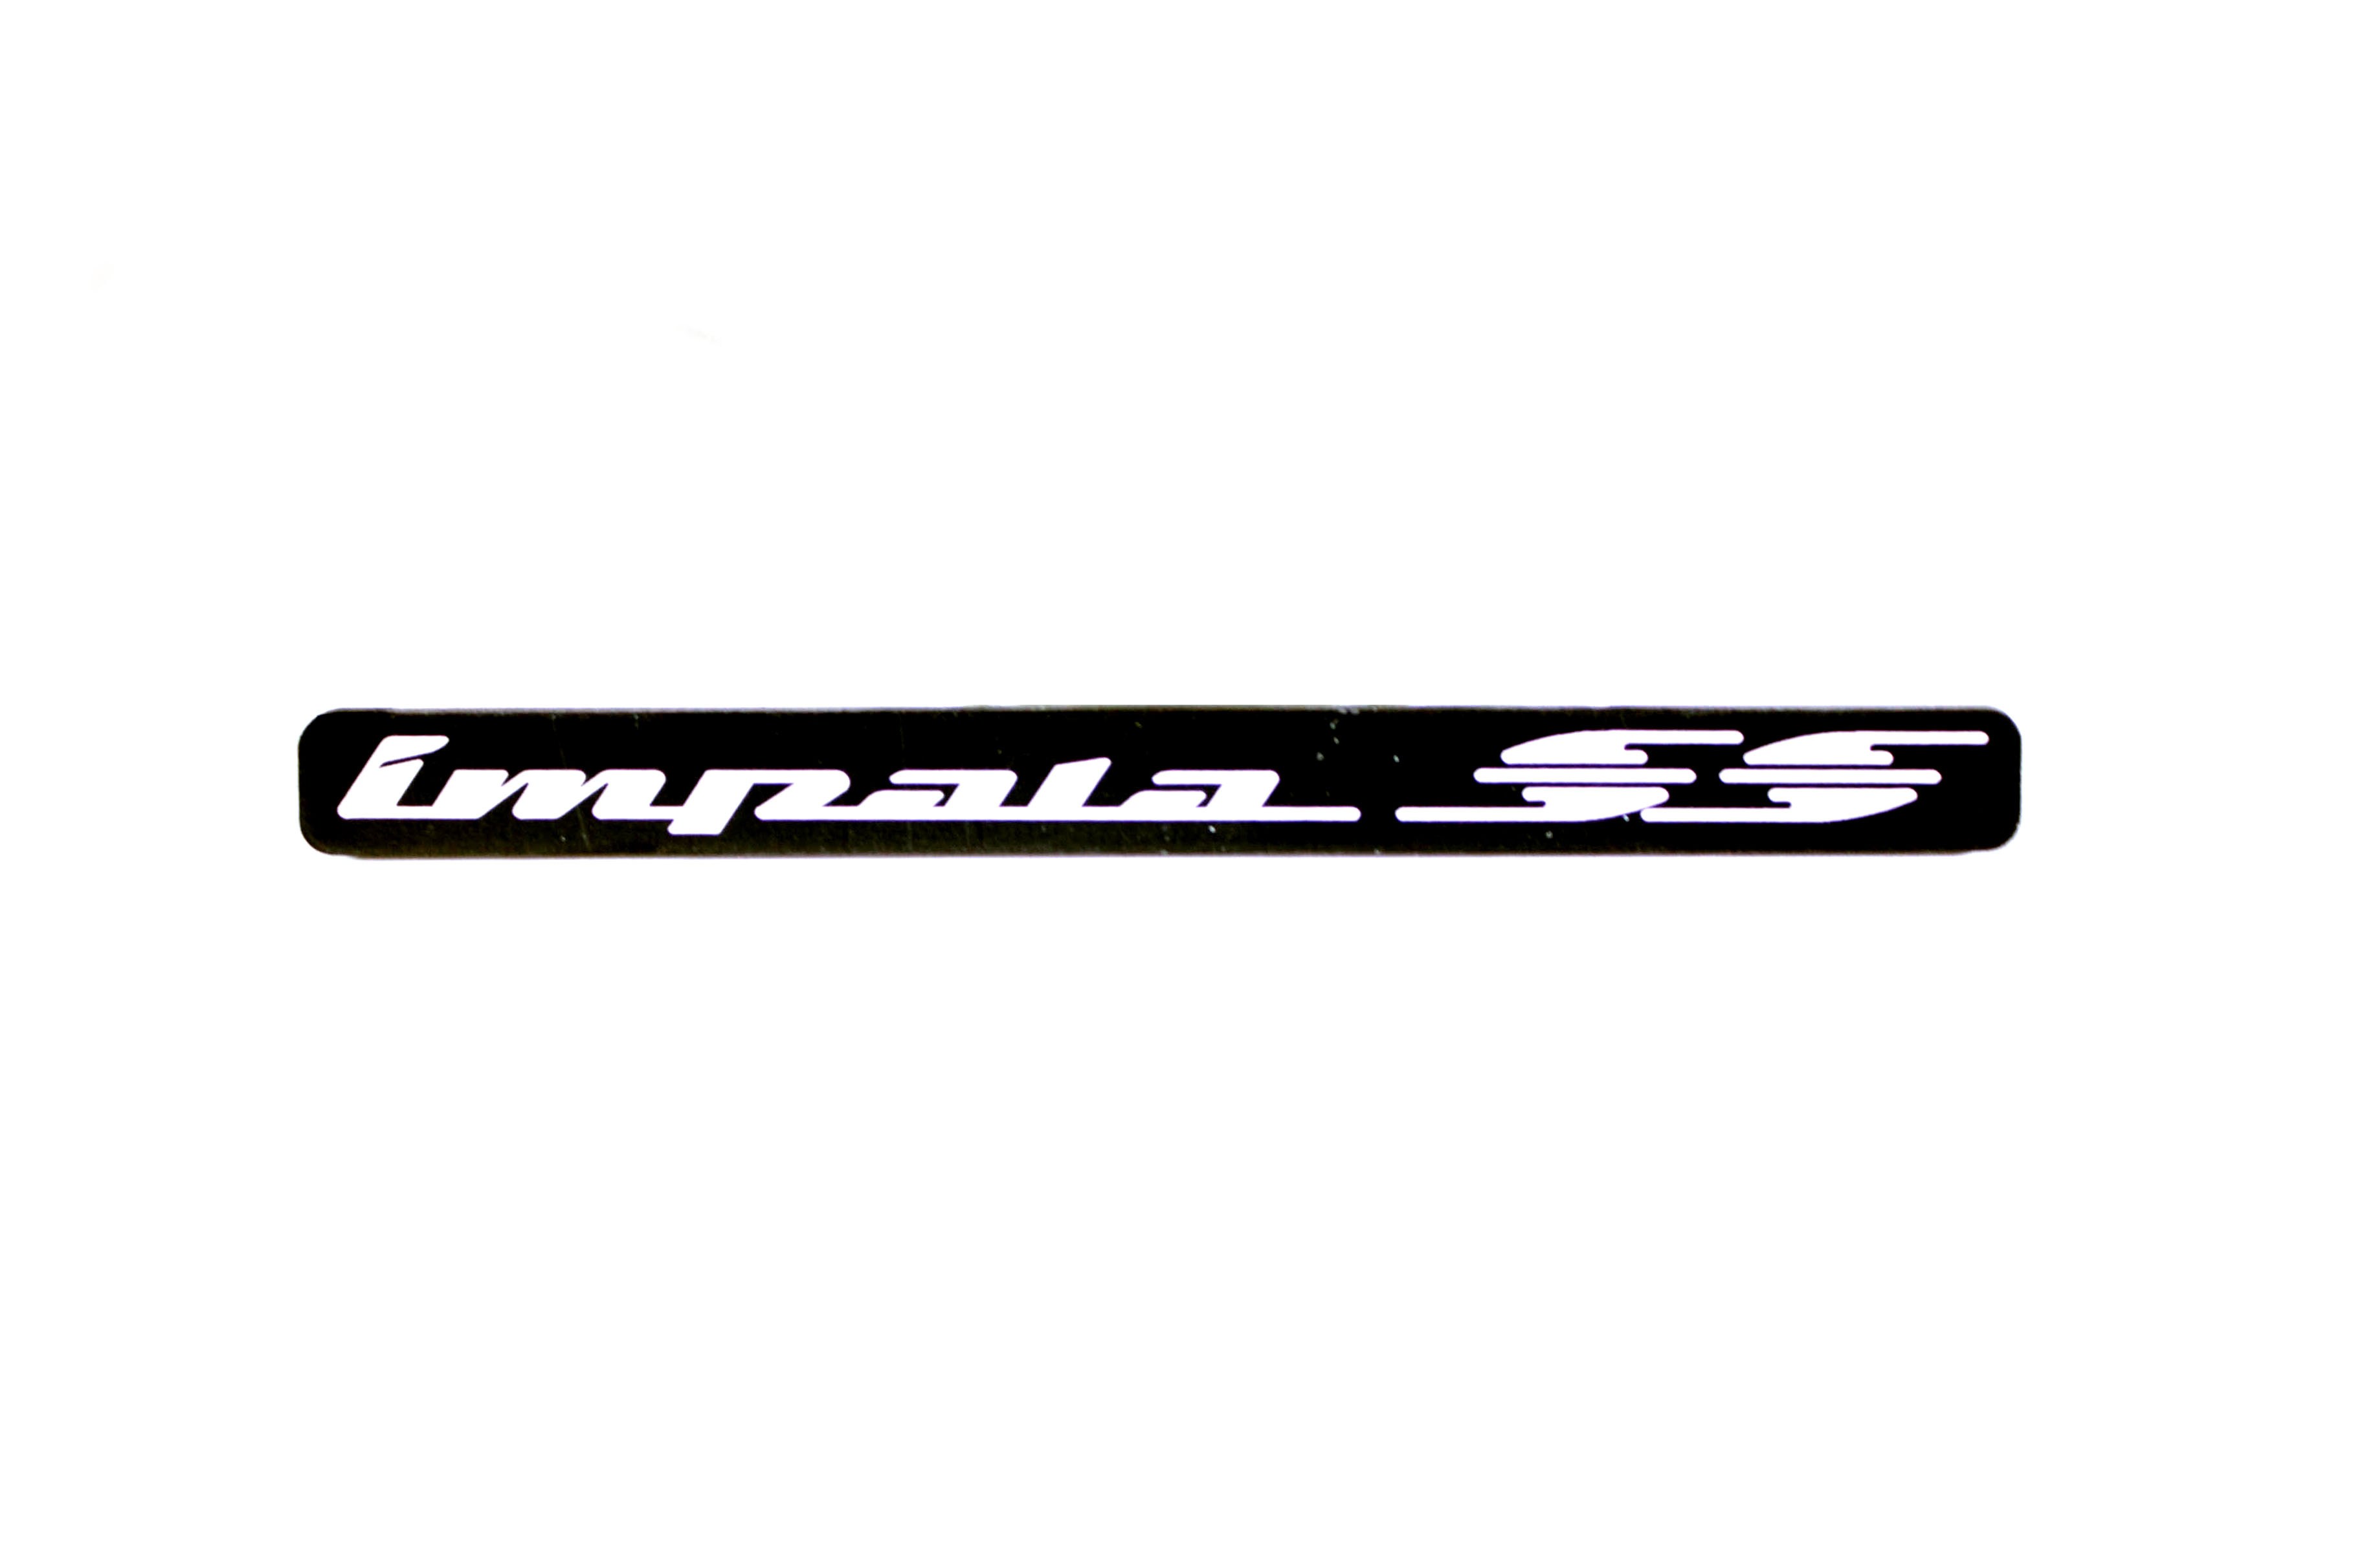 Impala Ss Logo Vector at Vectorified.com | Collection of Impala Ss Logo